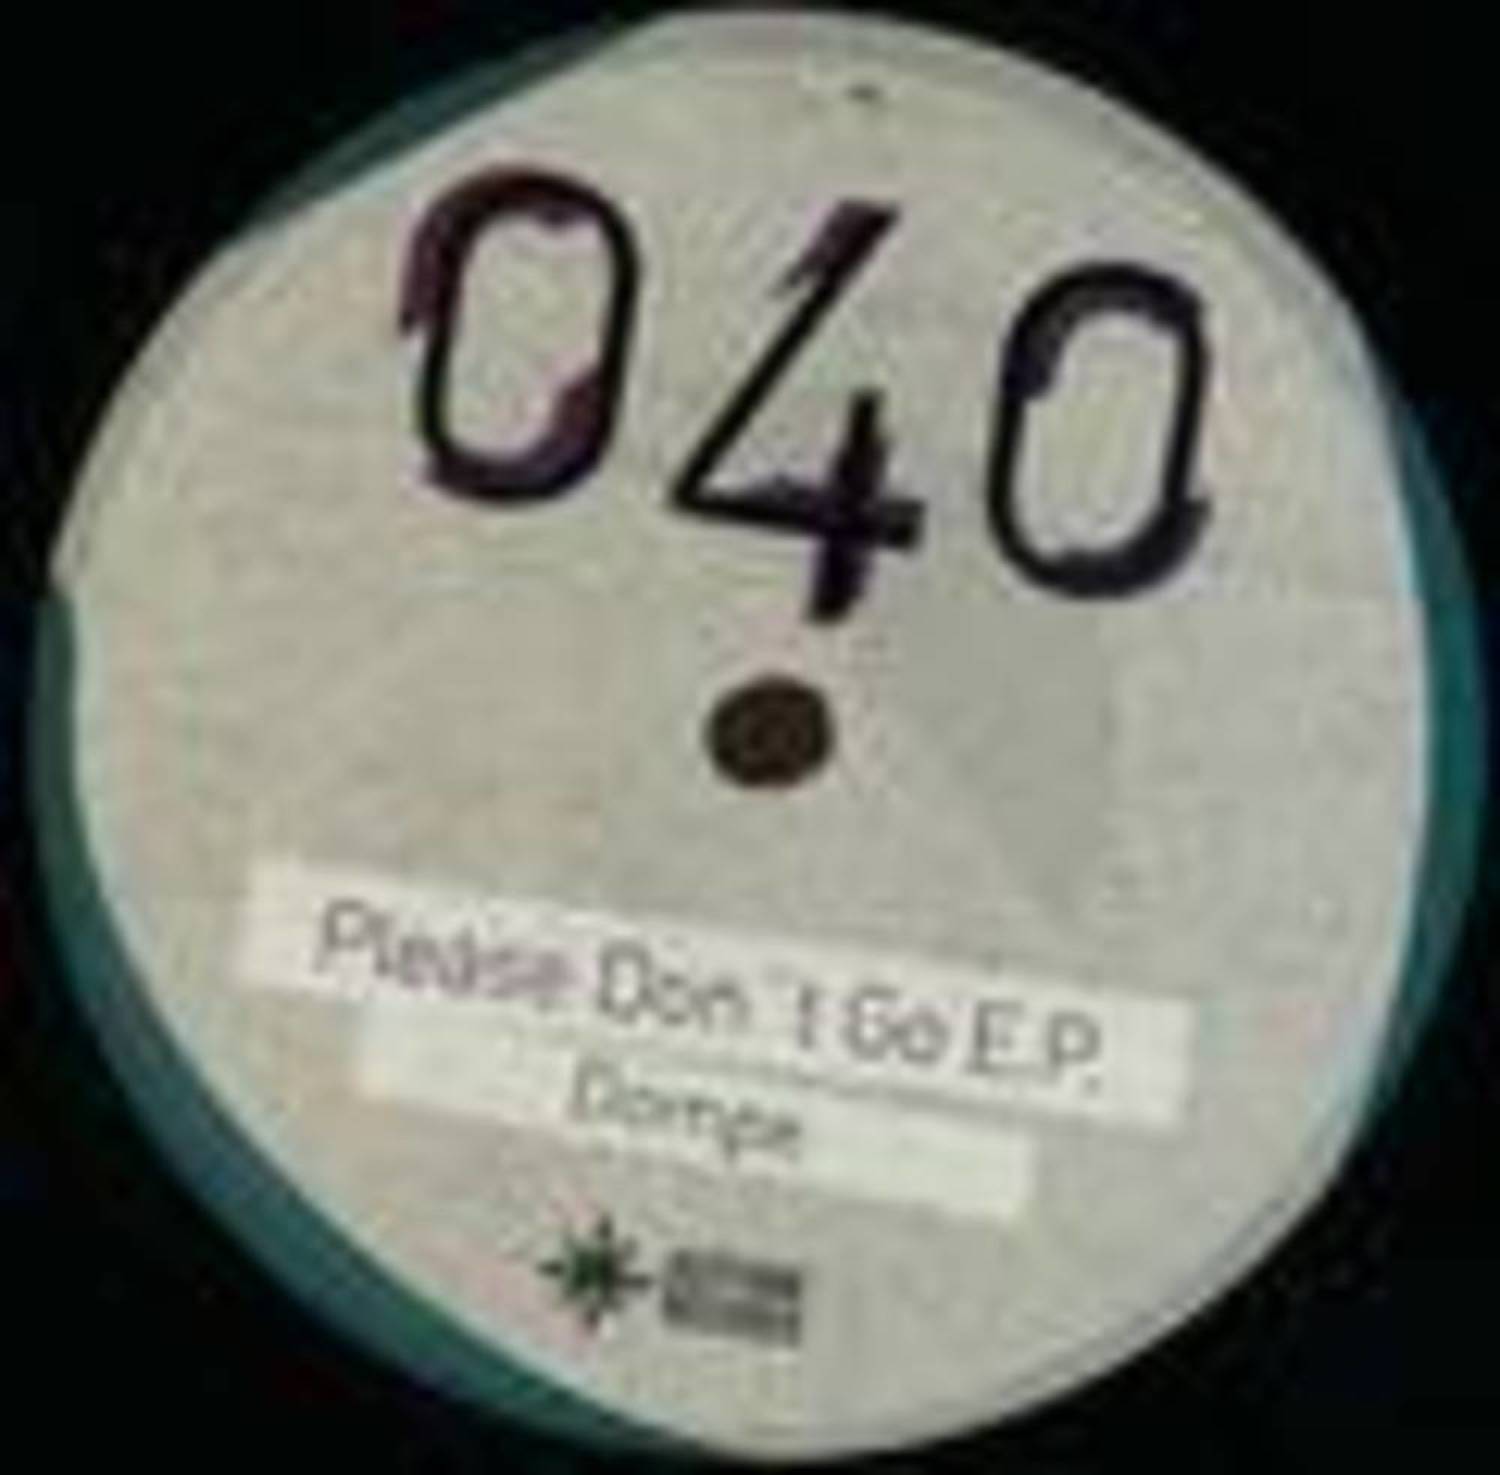 Dompe - PLEASE DONT GO EP